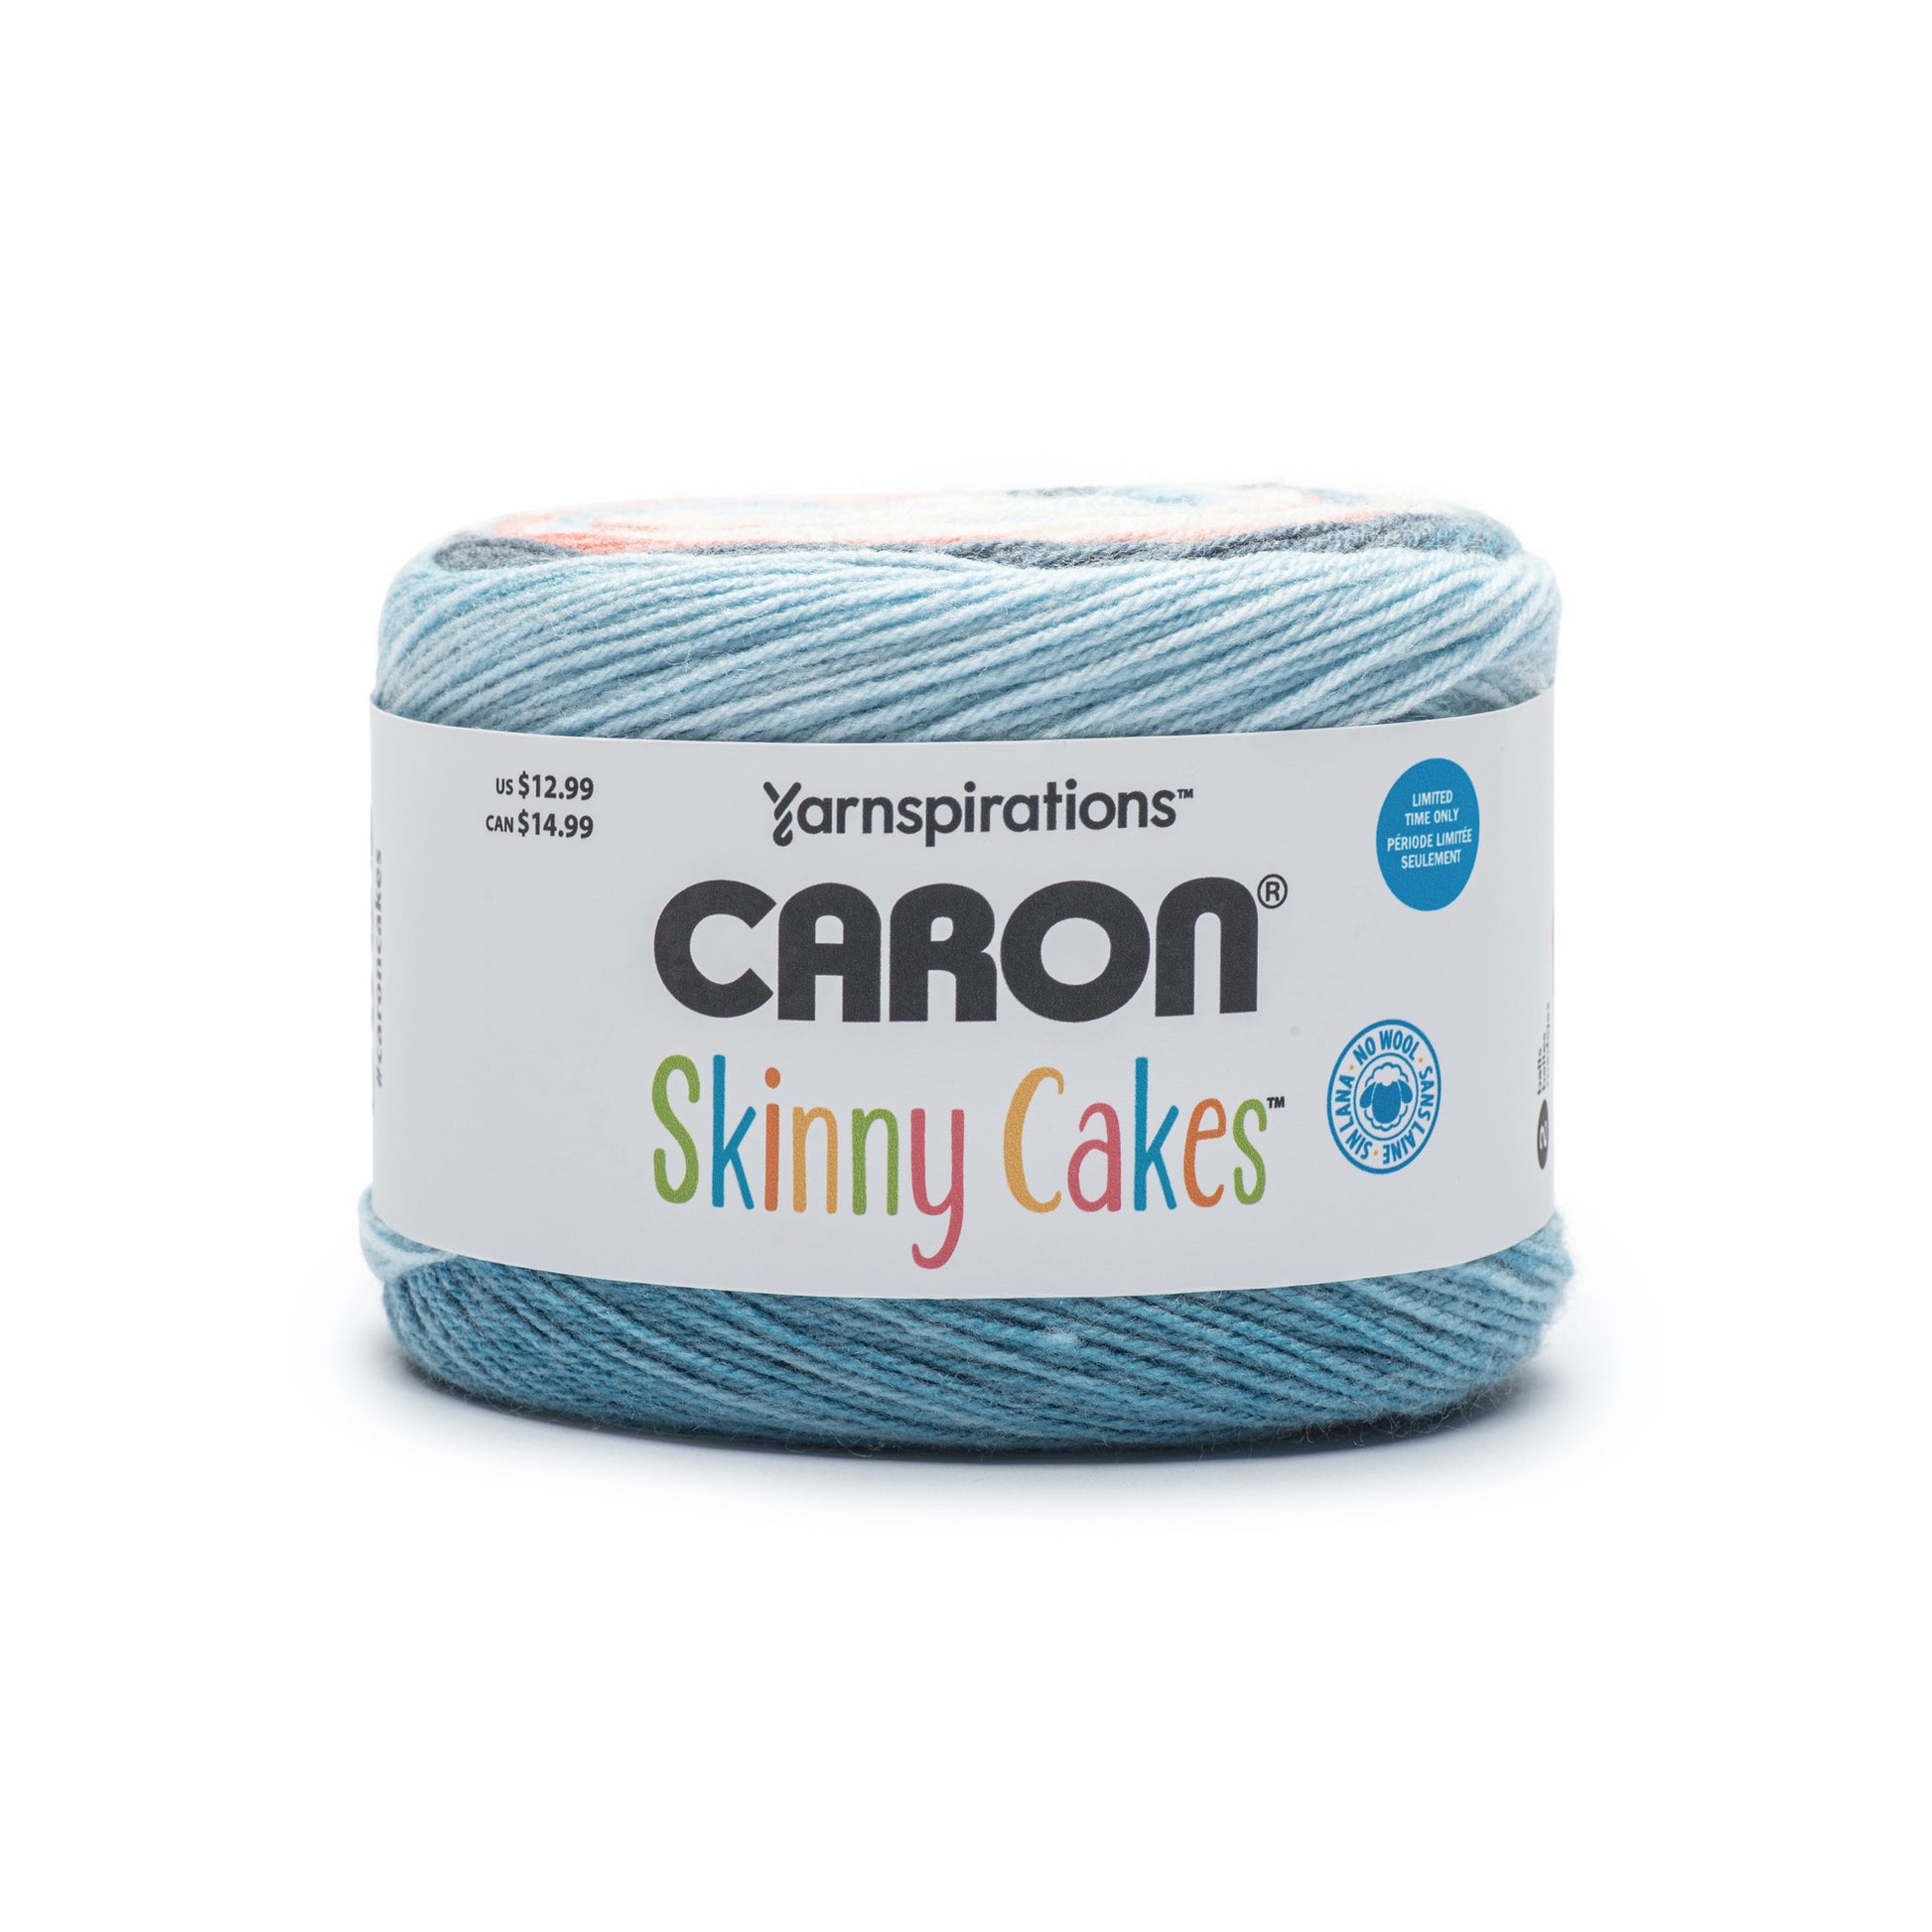 Caron Skinny Cakes Yarn (250g/8.8oz)